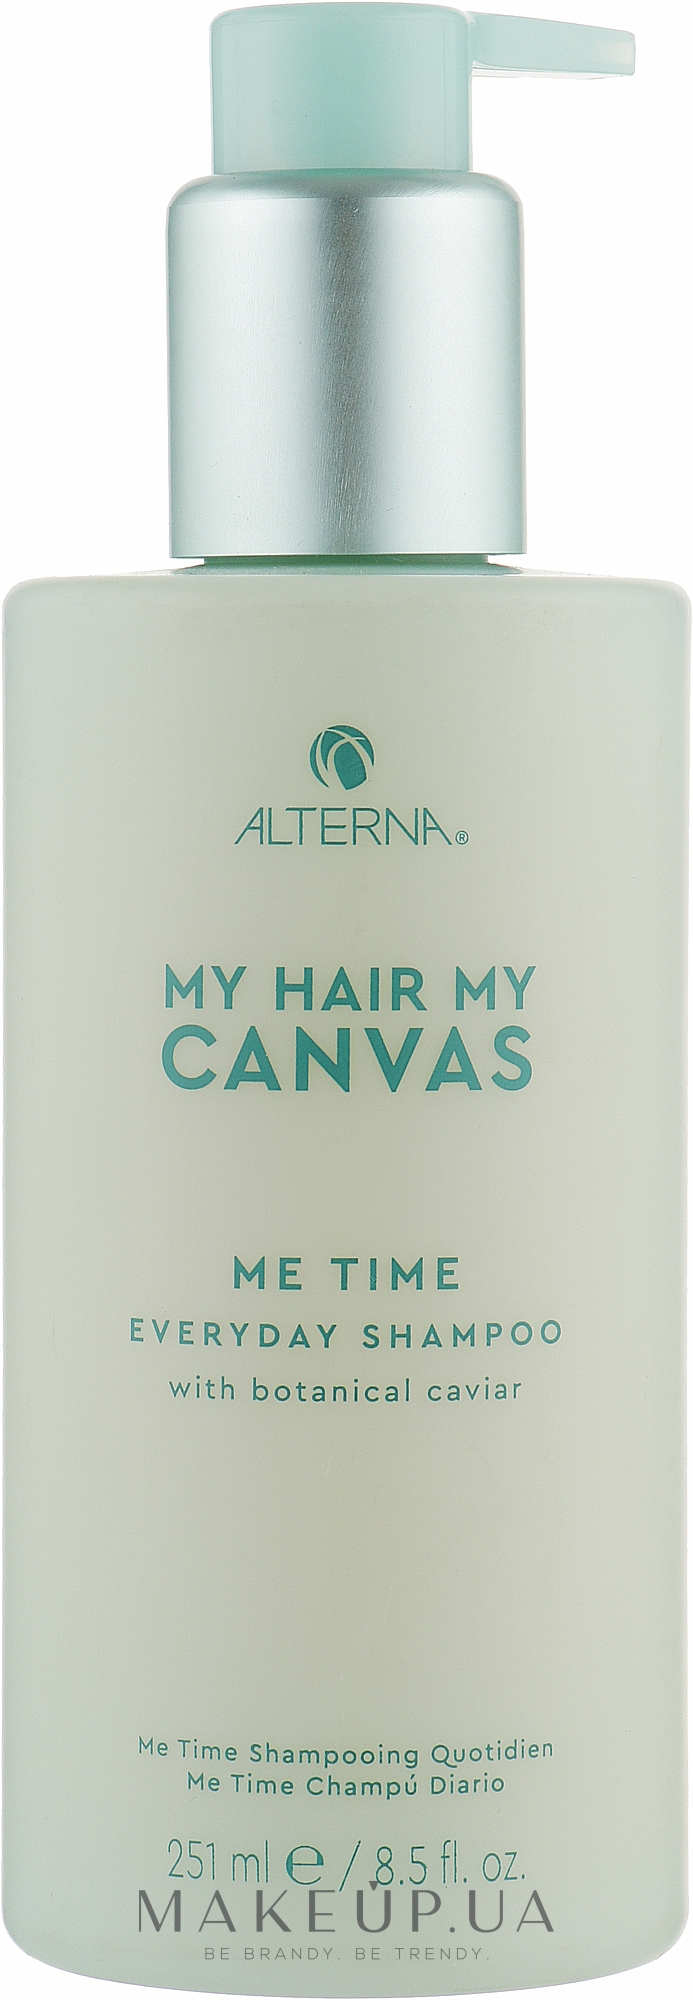 Ежедневный увлажняющий шампунь - Alterna My Hair My Canvas Me Time Everyday Shampoo — фото 251ml